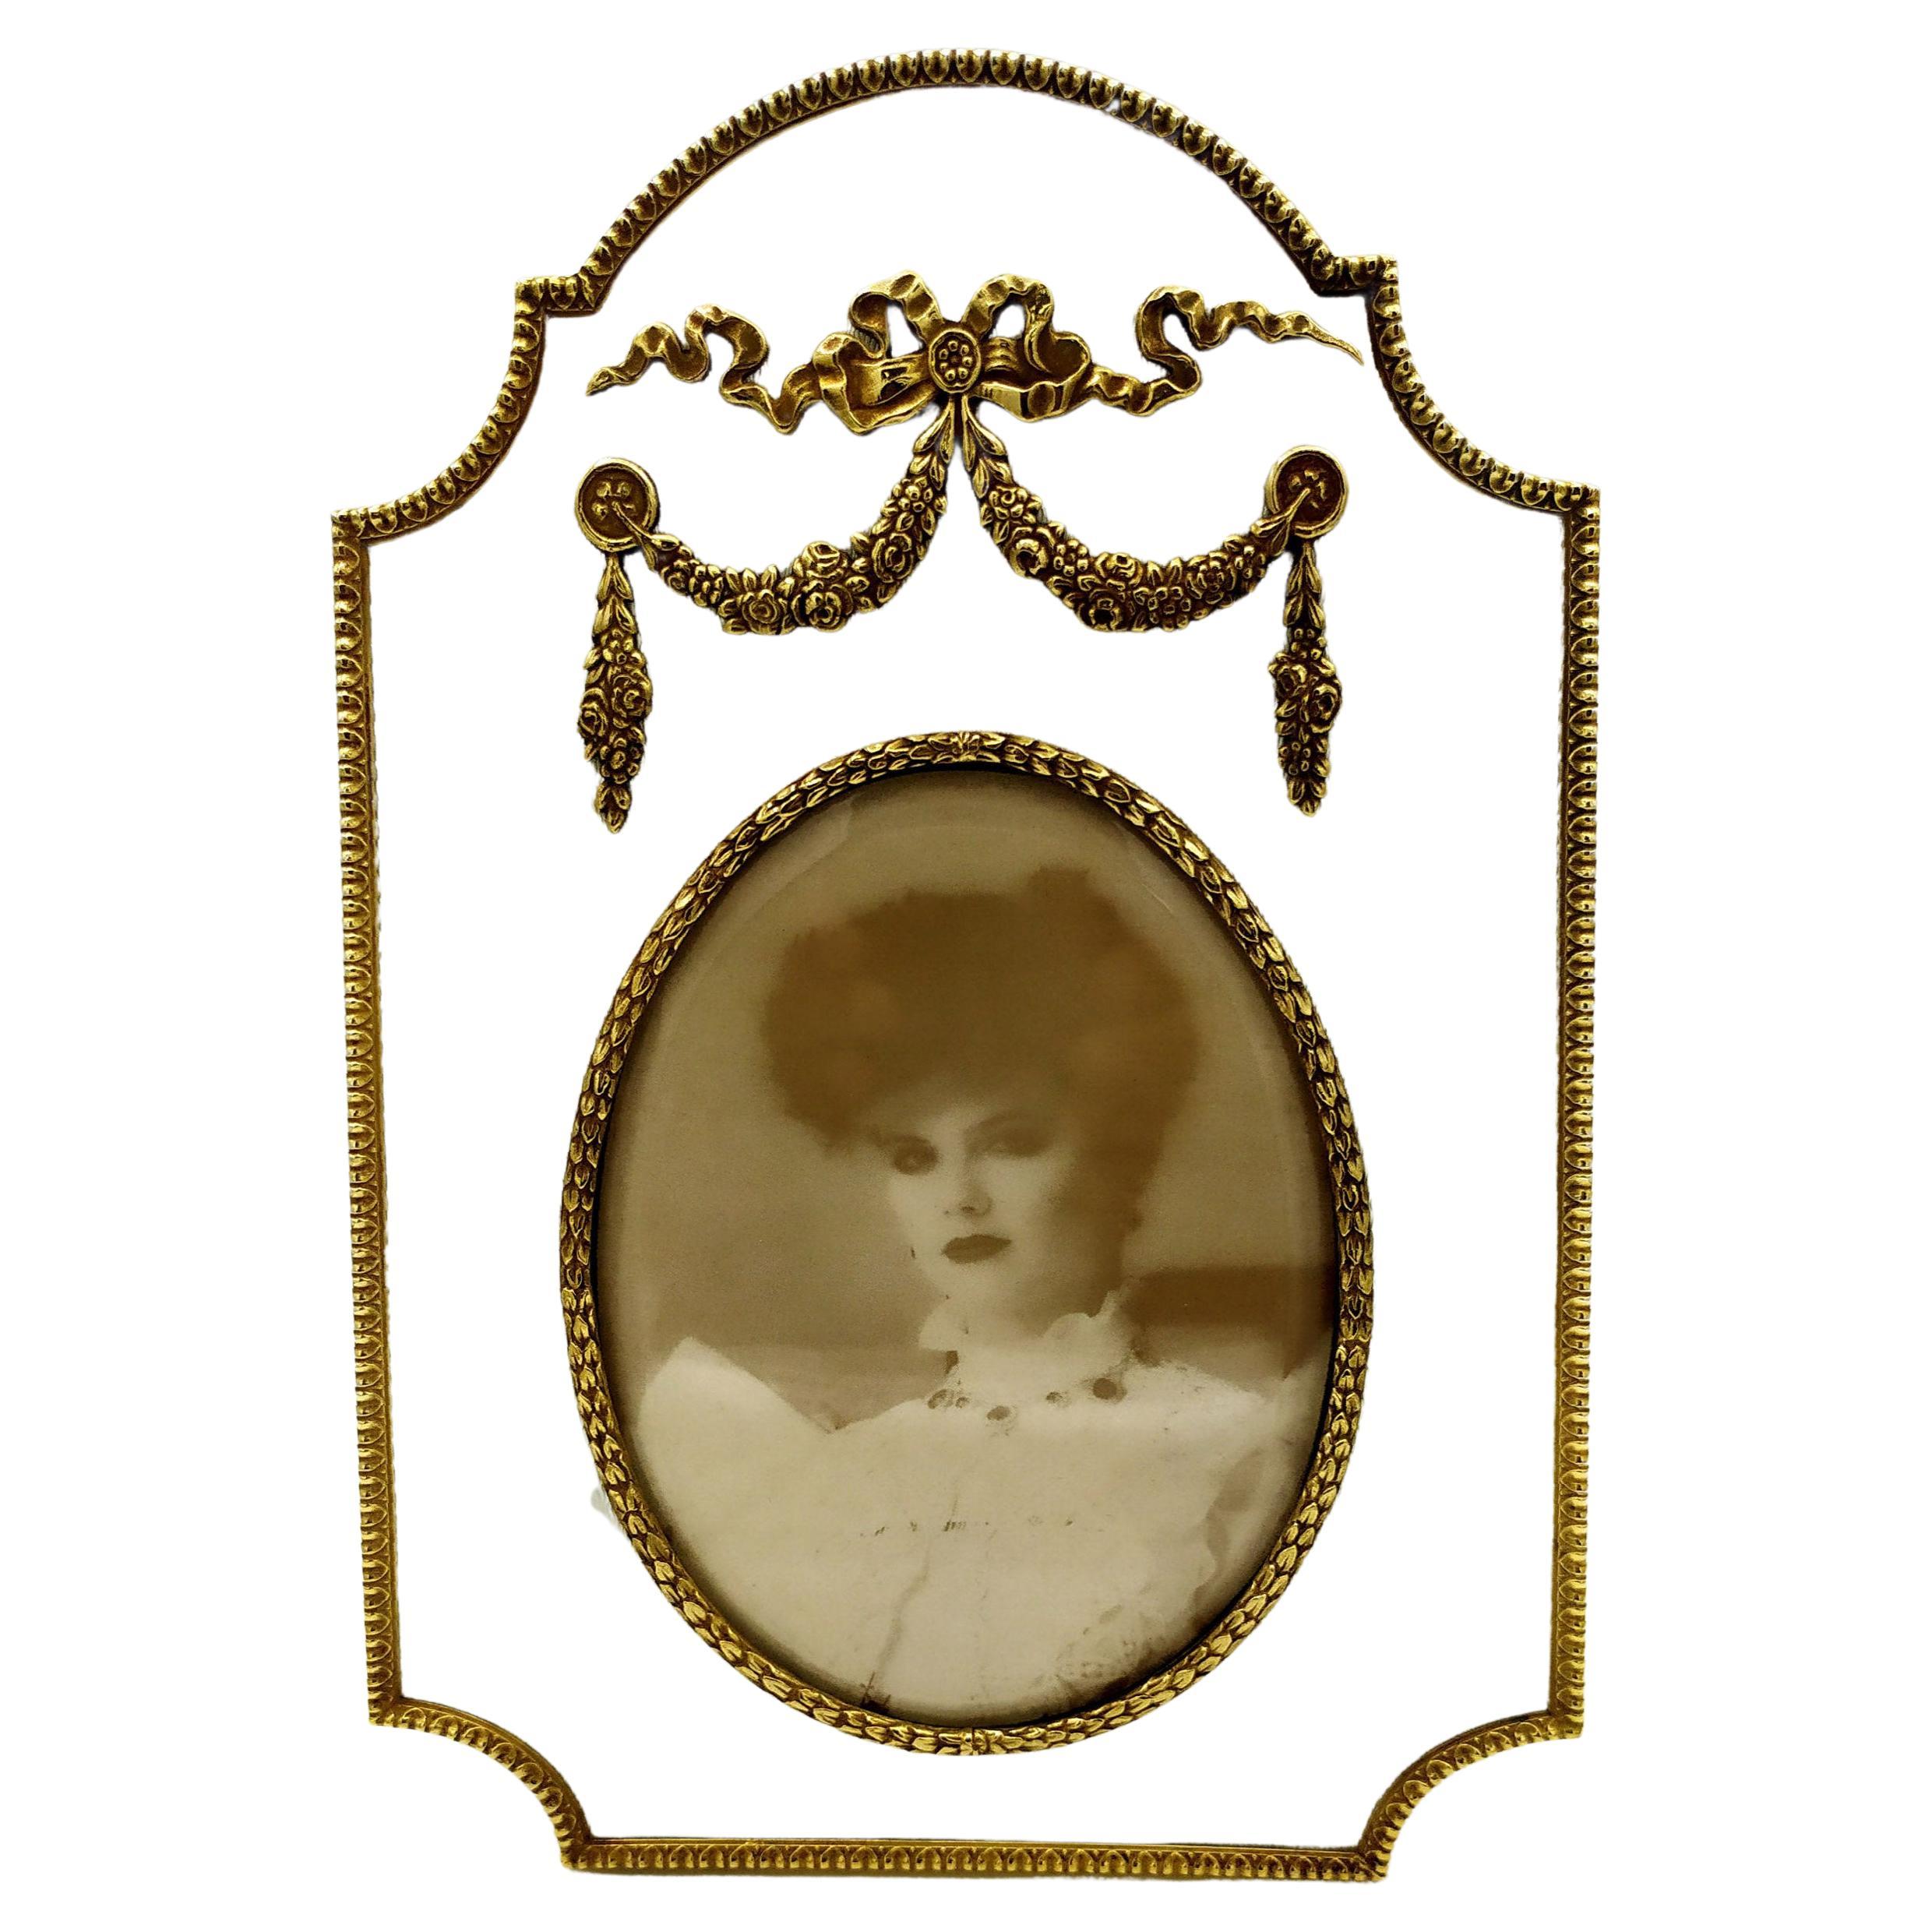 Photograph Frame Large Imperial Style White Enamel on Sterling Silver Salimbeni